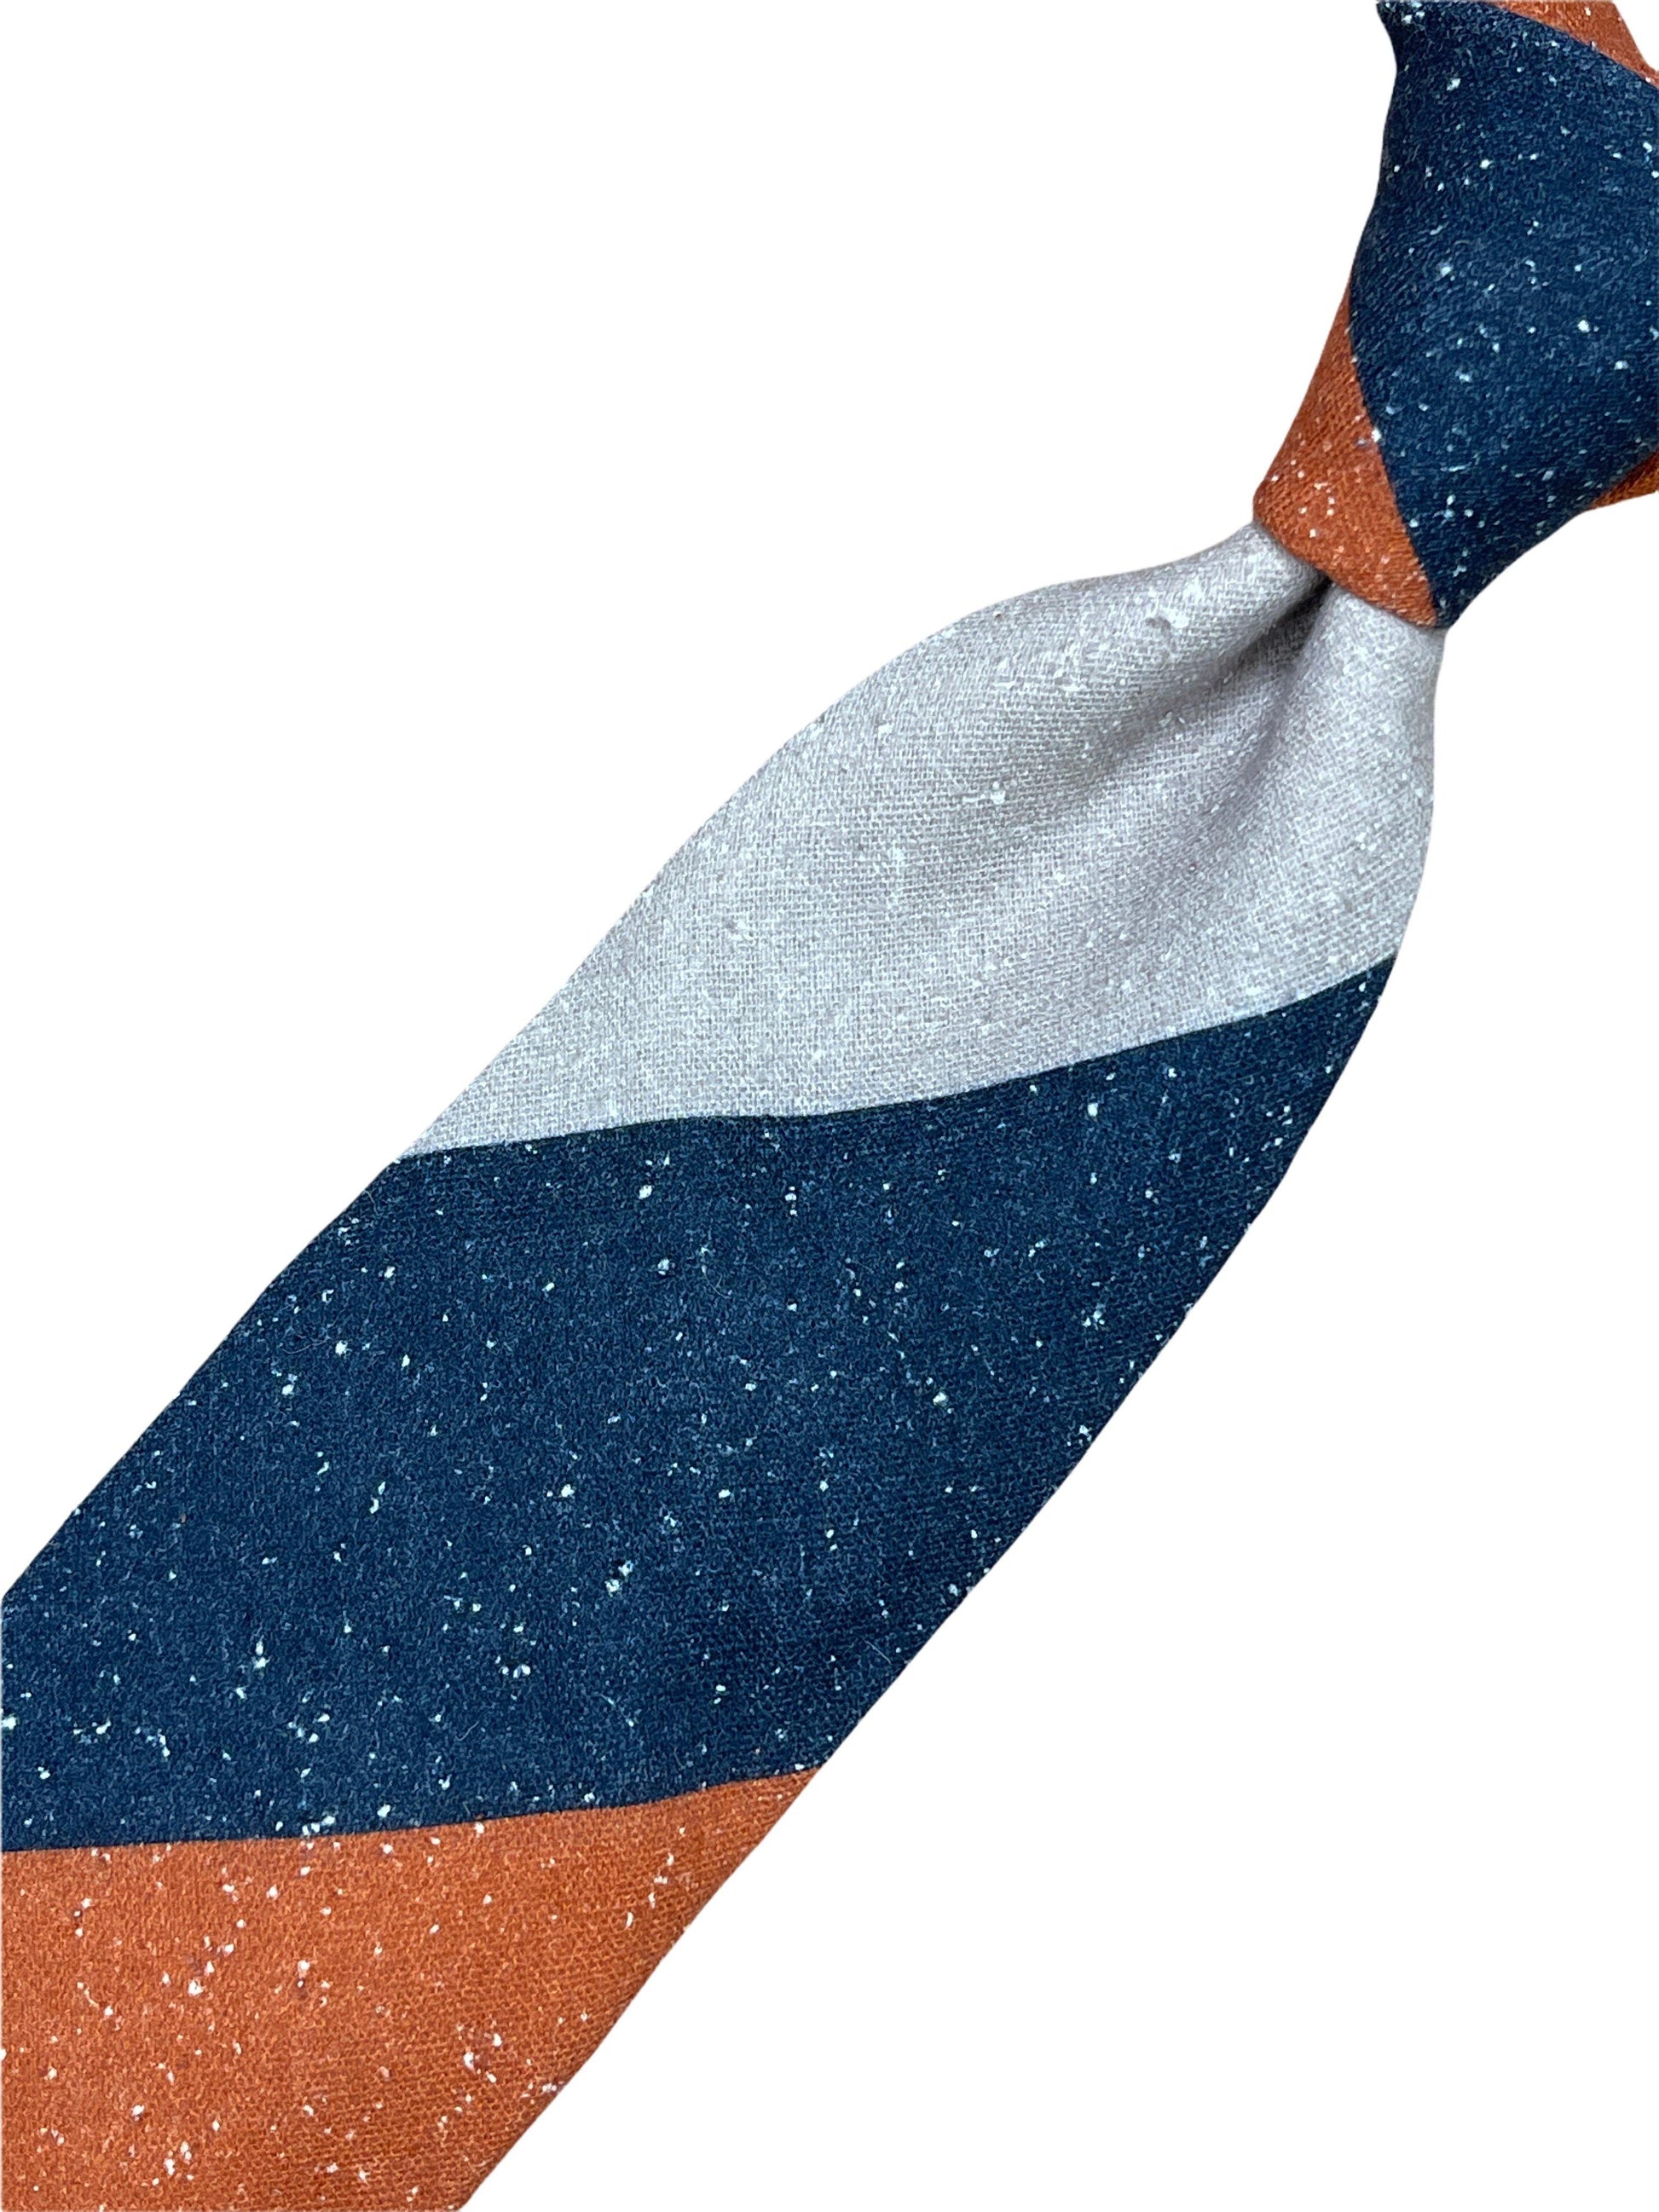 Stenstroms Donegal striped silk tie, navy, tan, and orange. Genuine Design luxury consignment